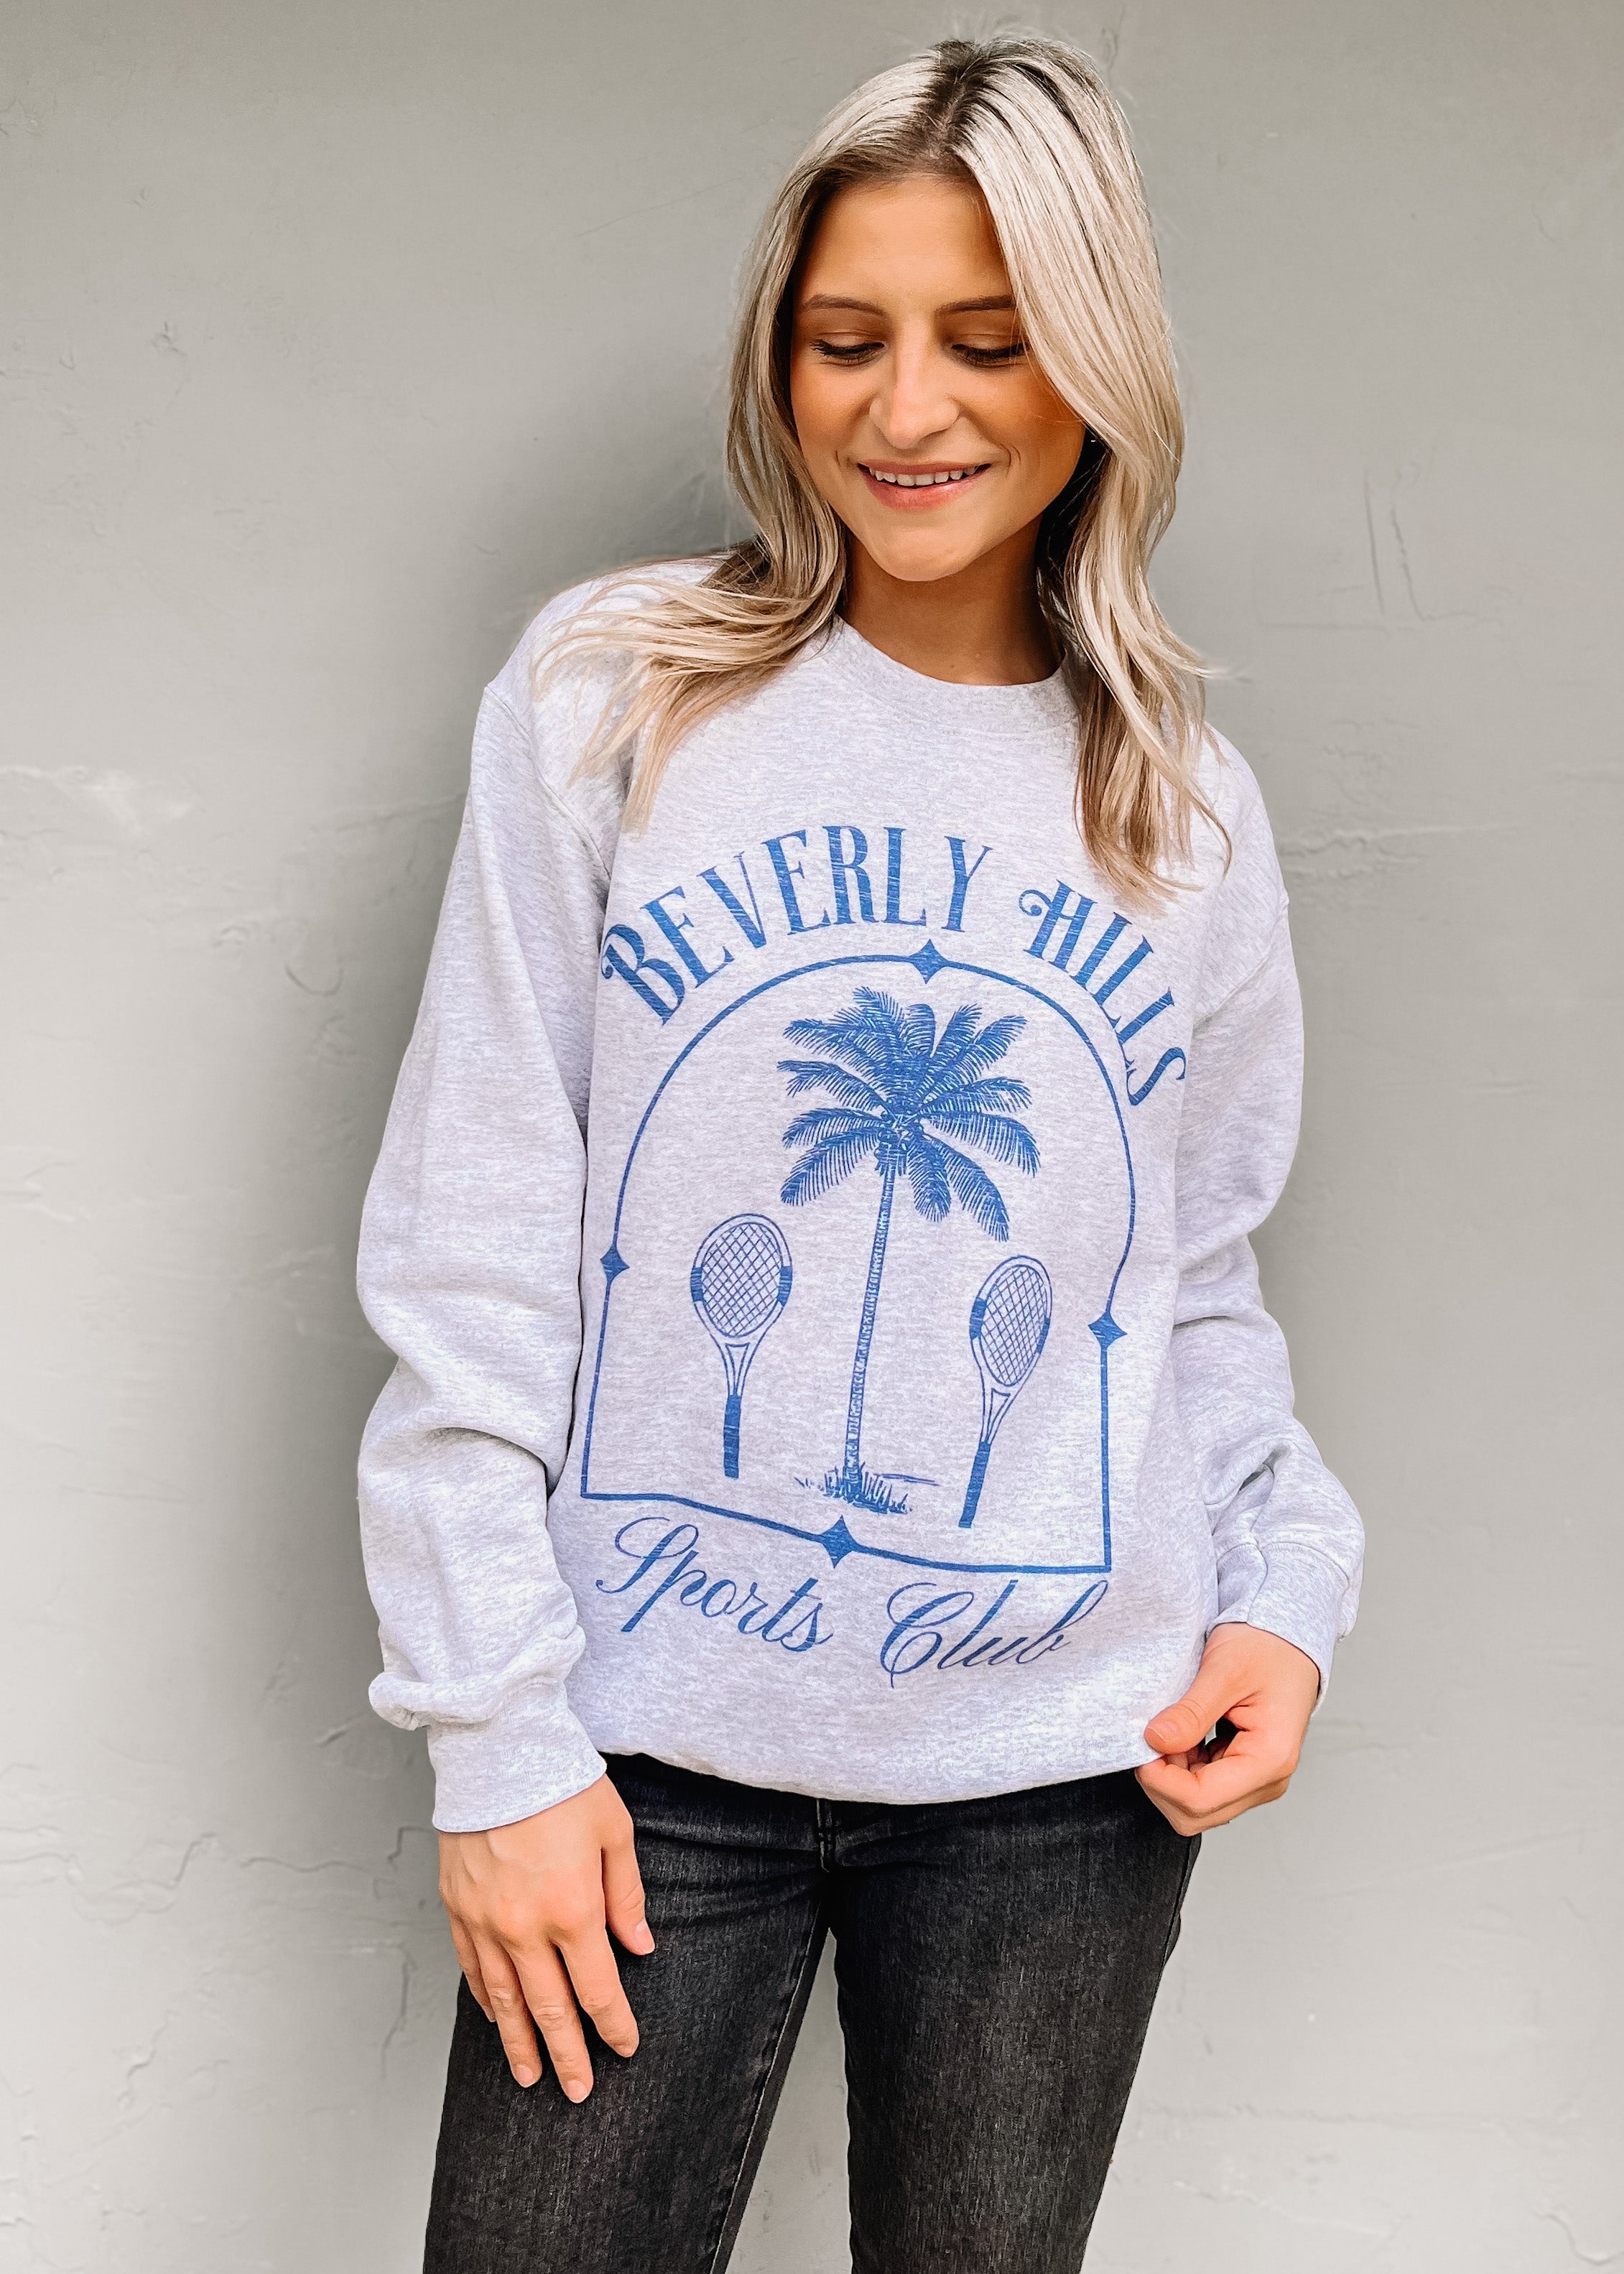 Beverly Hills Sports Club Sweatshirt